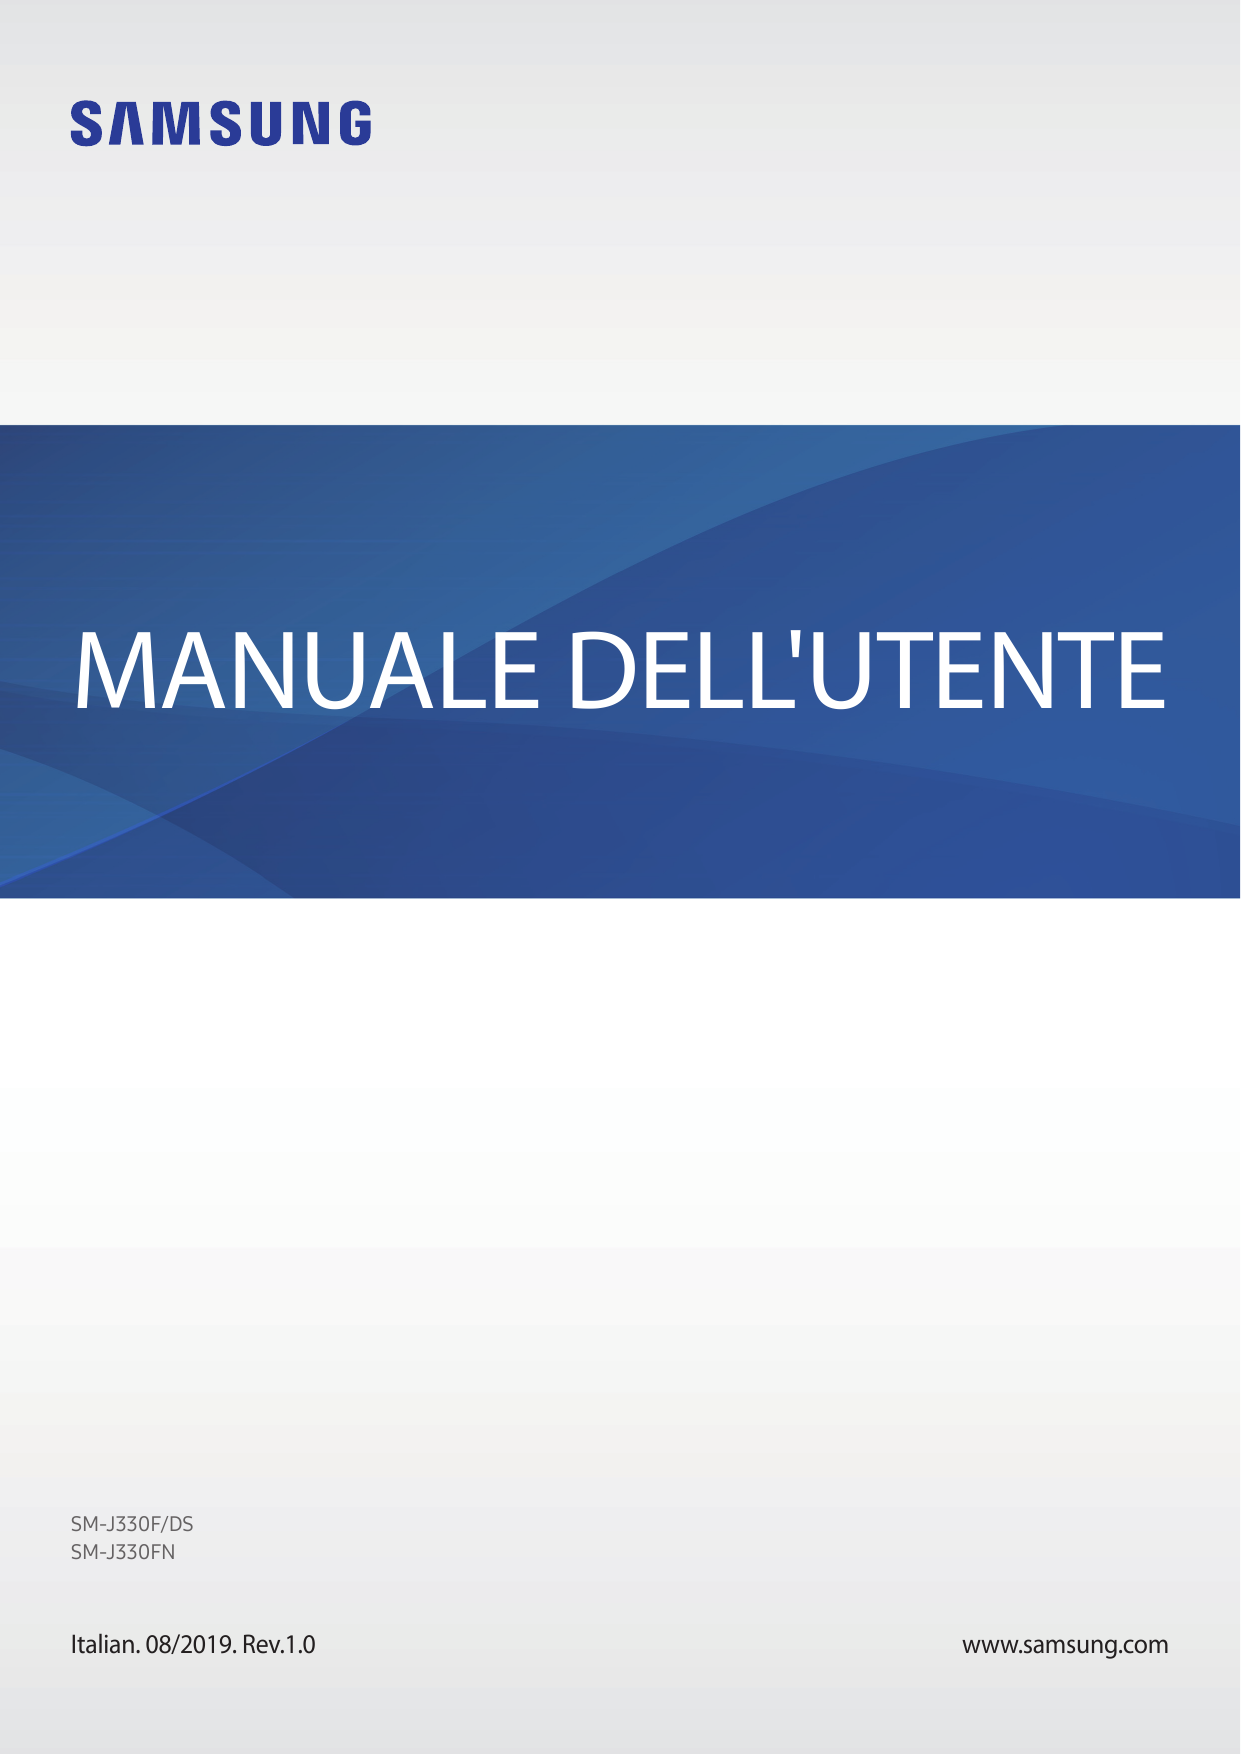 MANUALE DELL'UTENTESM-J330F/DSSM-J330FNItalian. 08/2019. Rev.1.0www.samsung.com